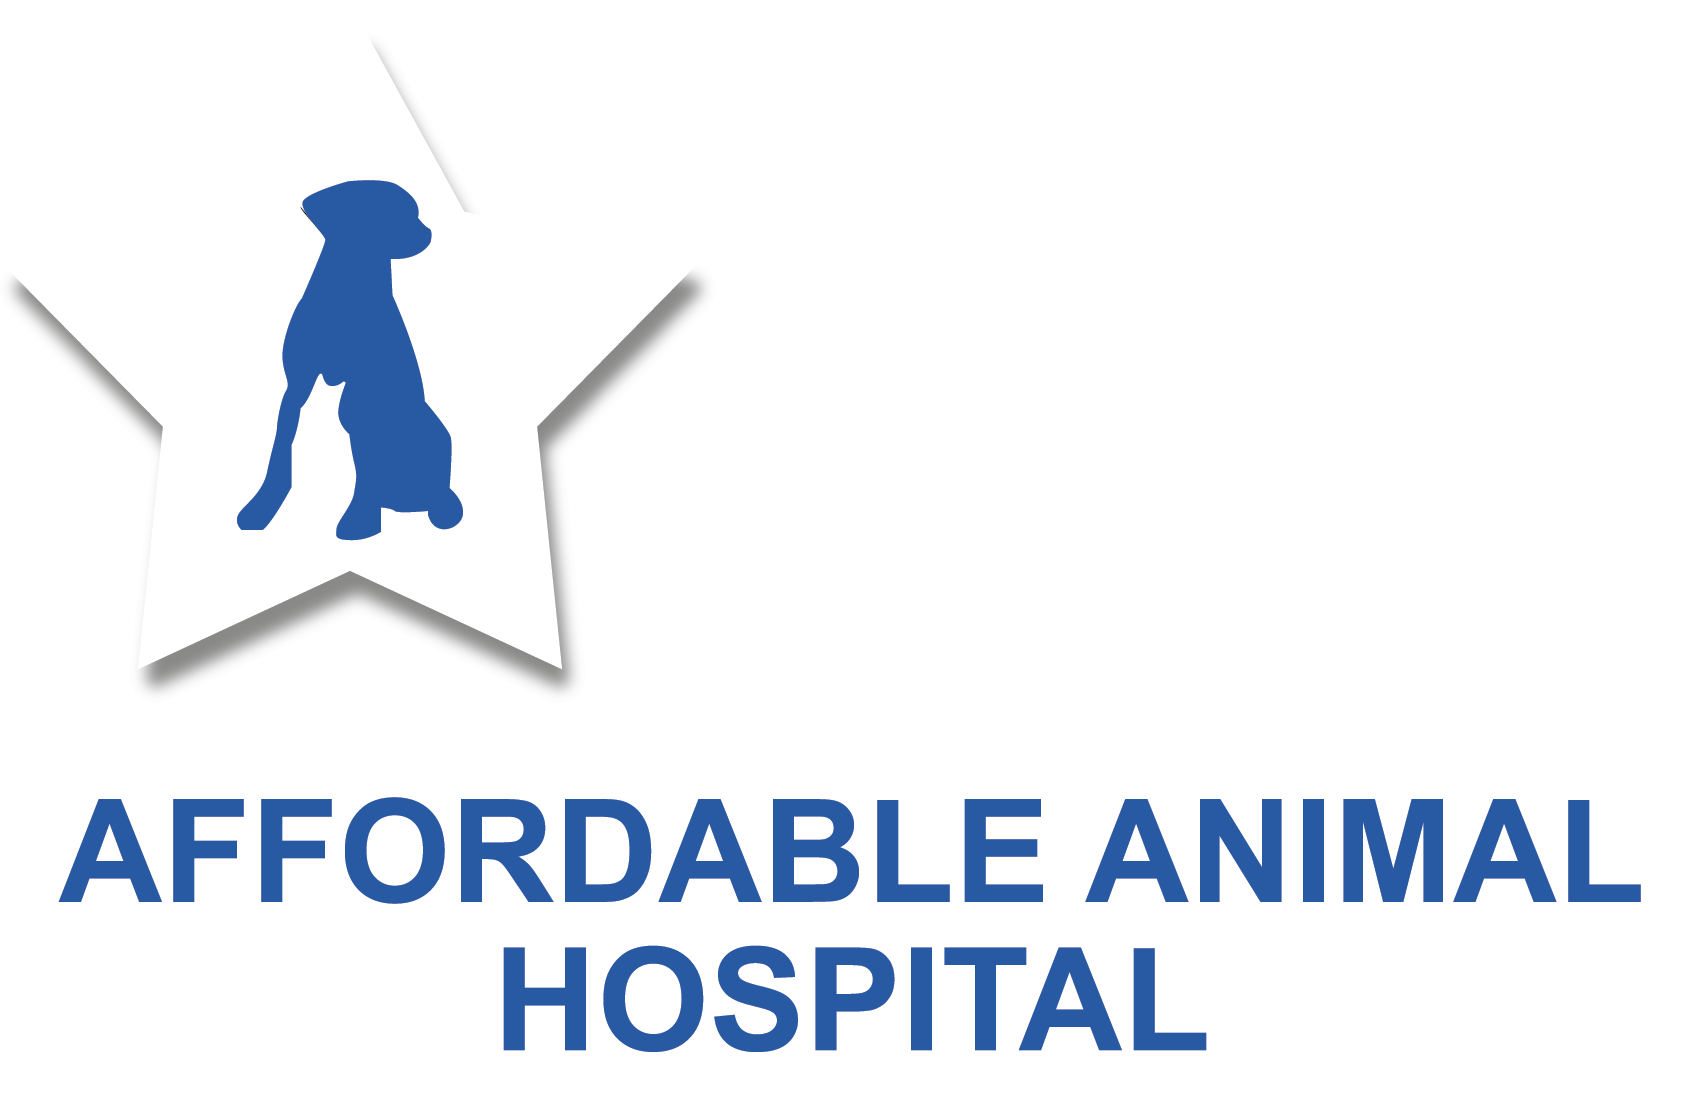 St. John's Affordable Animal Hospital